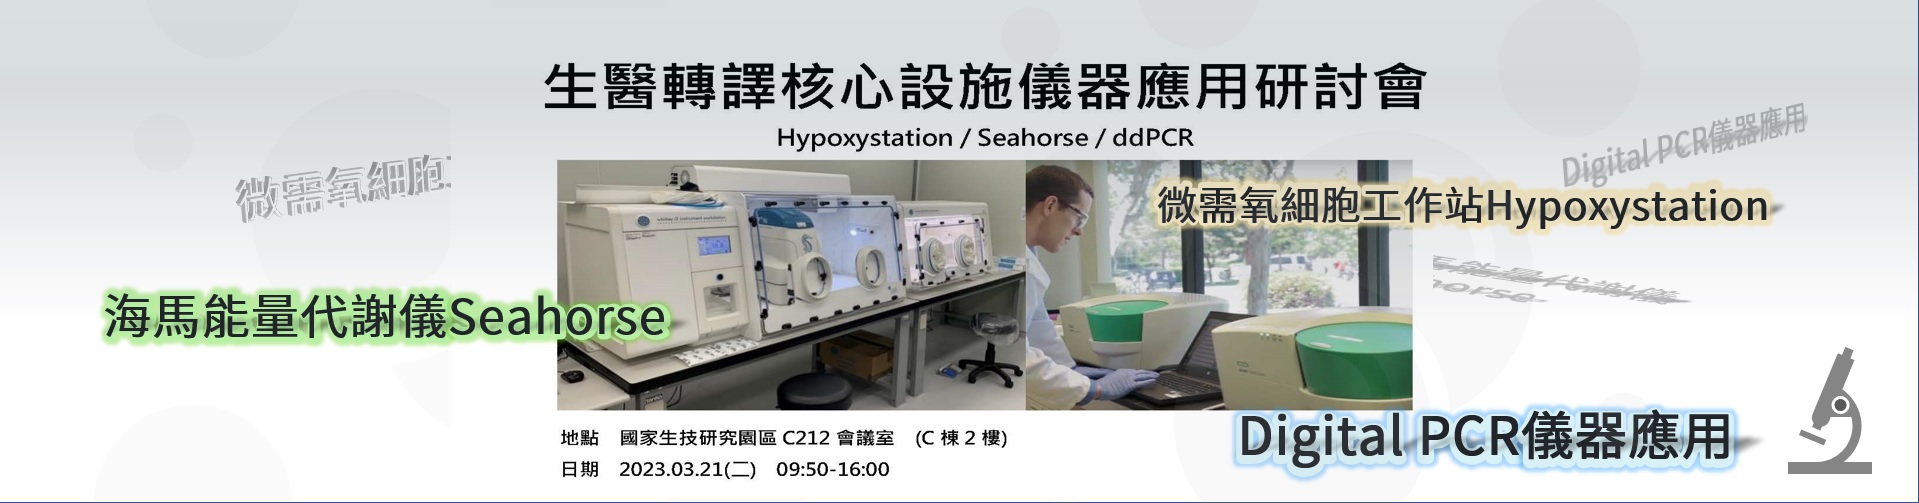 微需氧細胞工作站Hypoxystation、海馬能量代謝儀Seahorse、Digital PCR儀器應用分享研討會